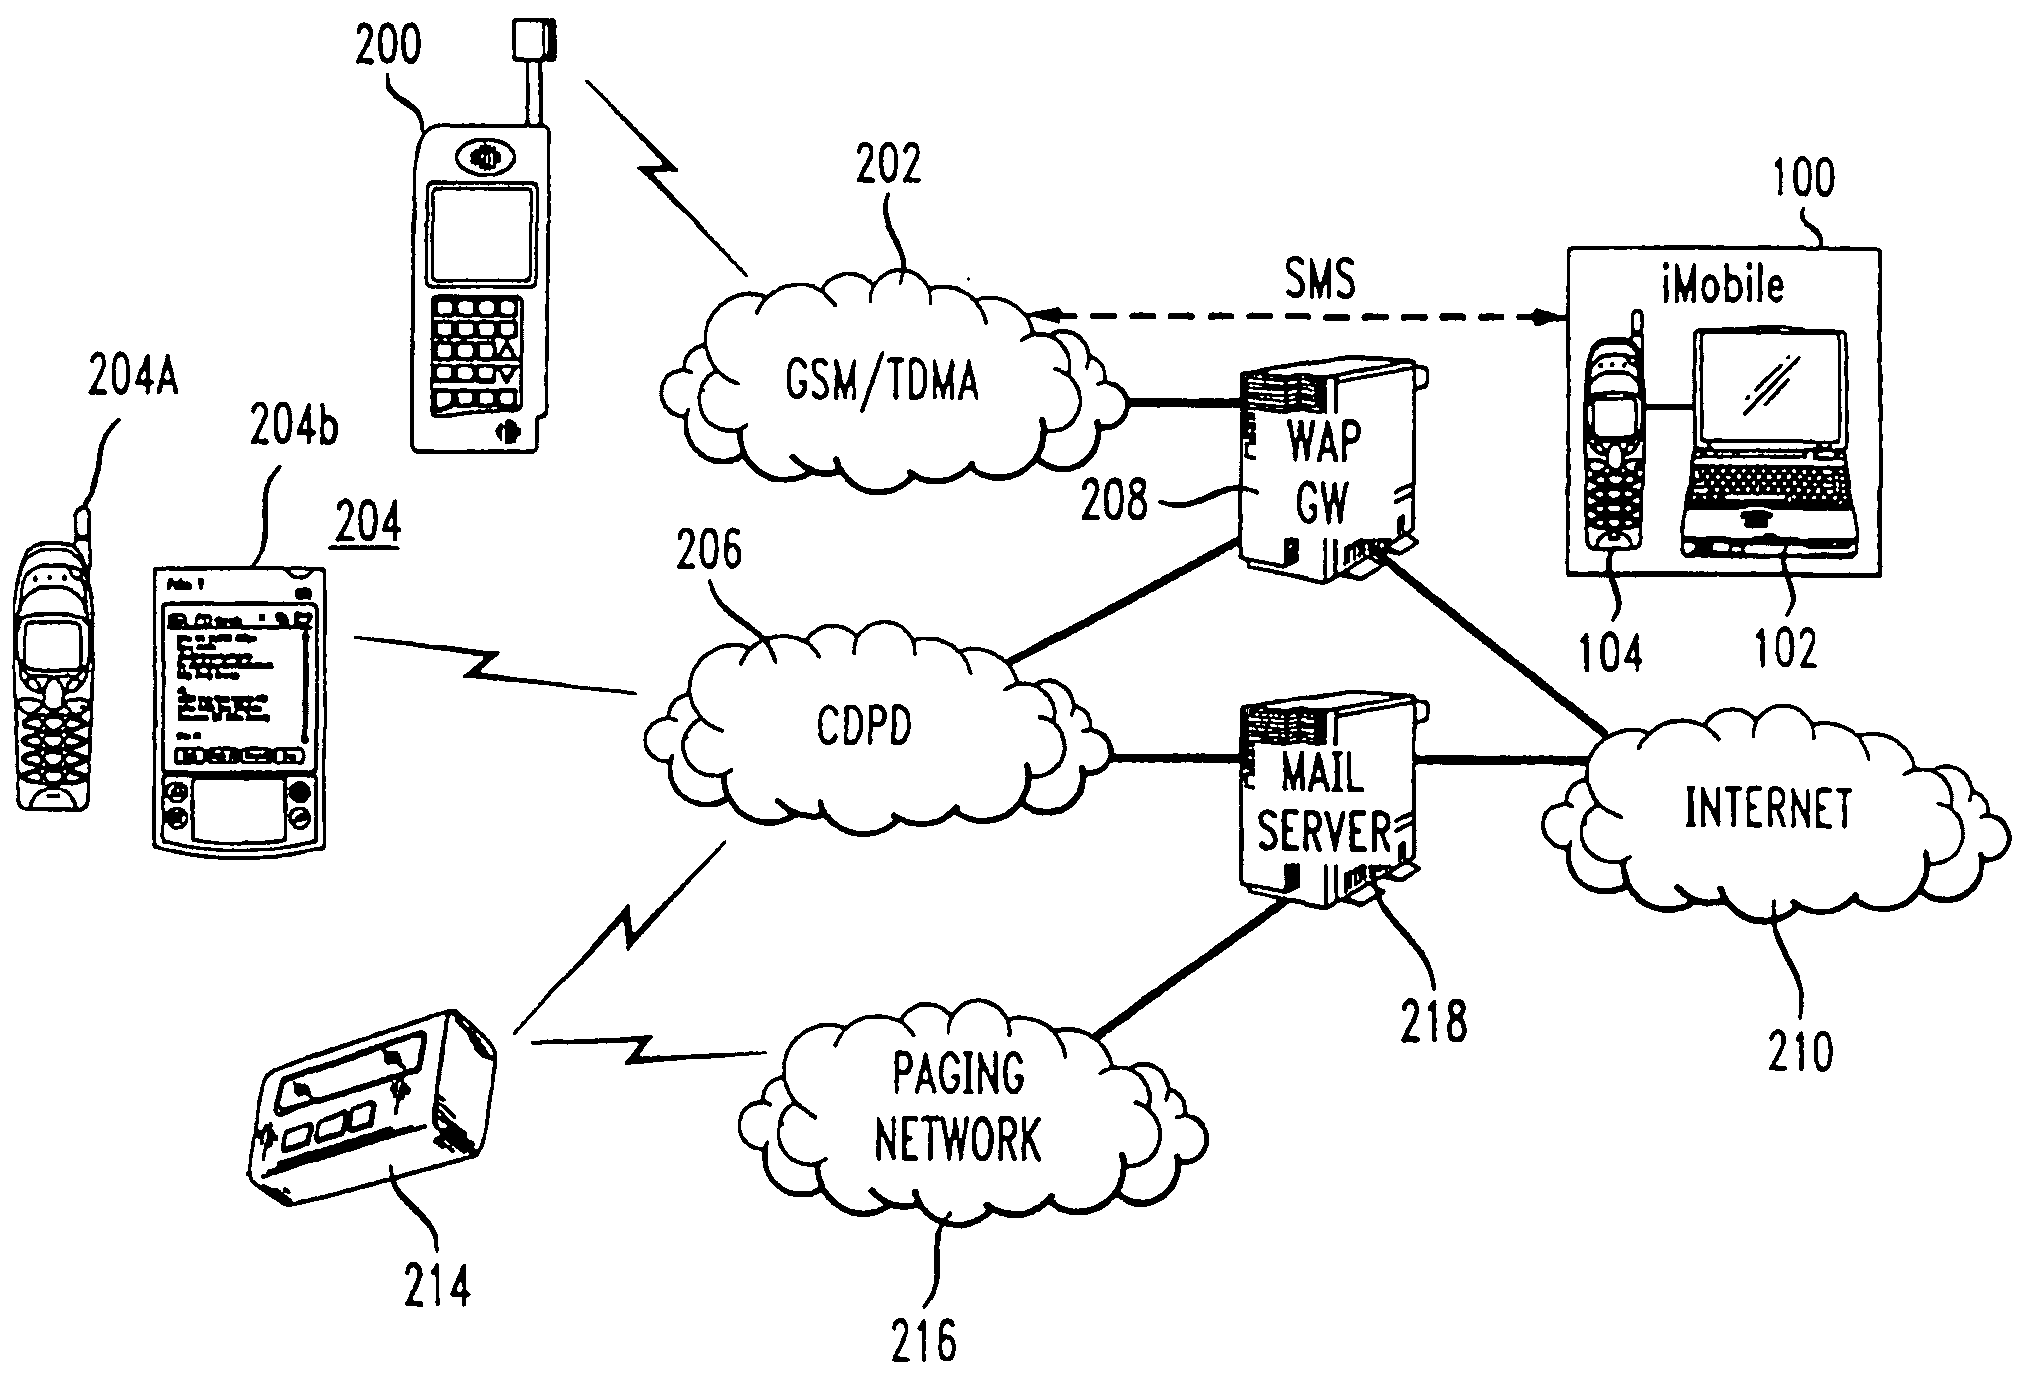 Mobile device server